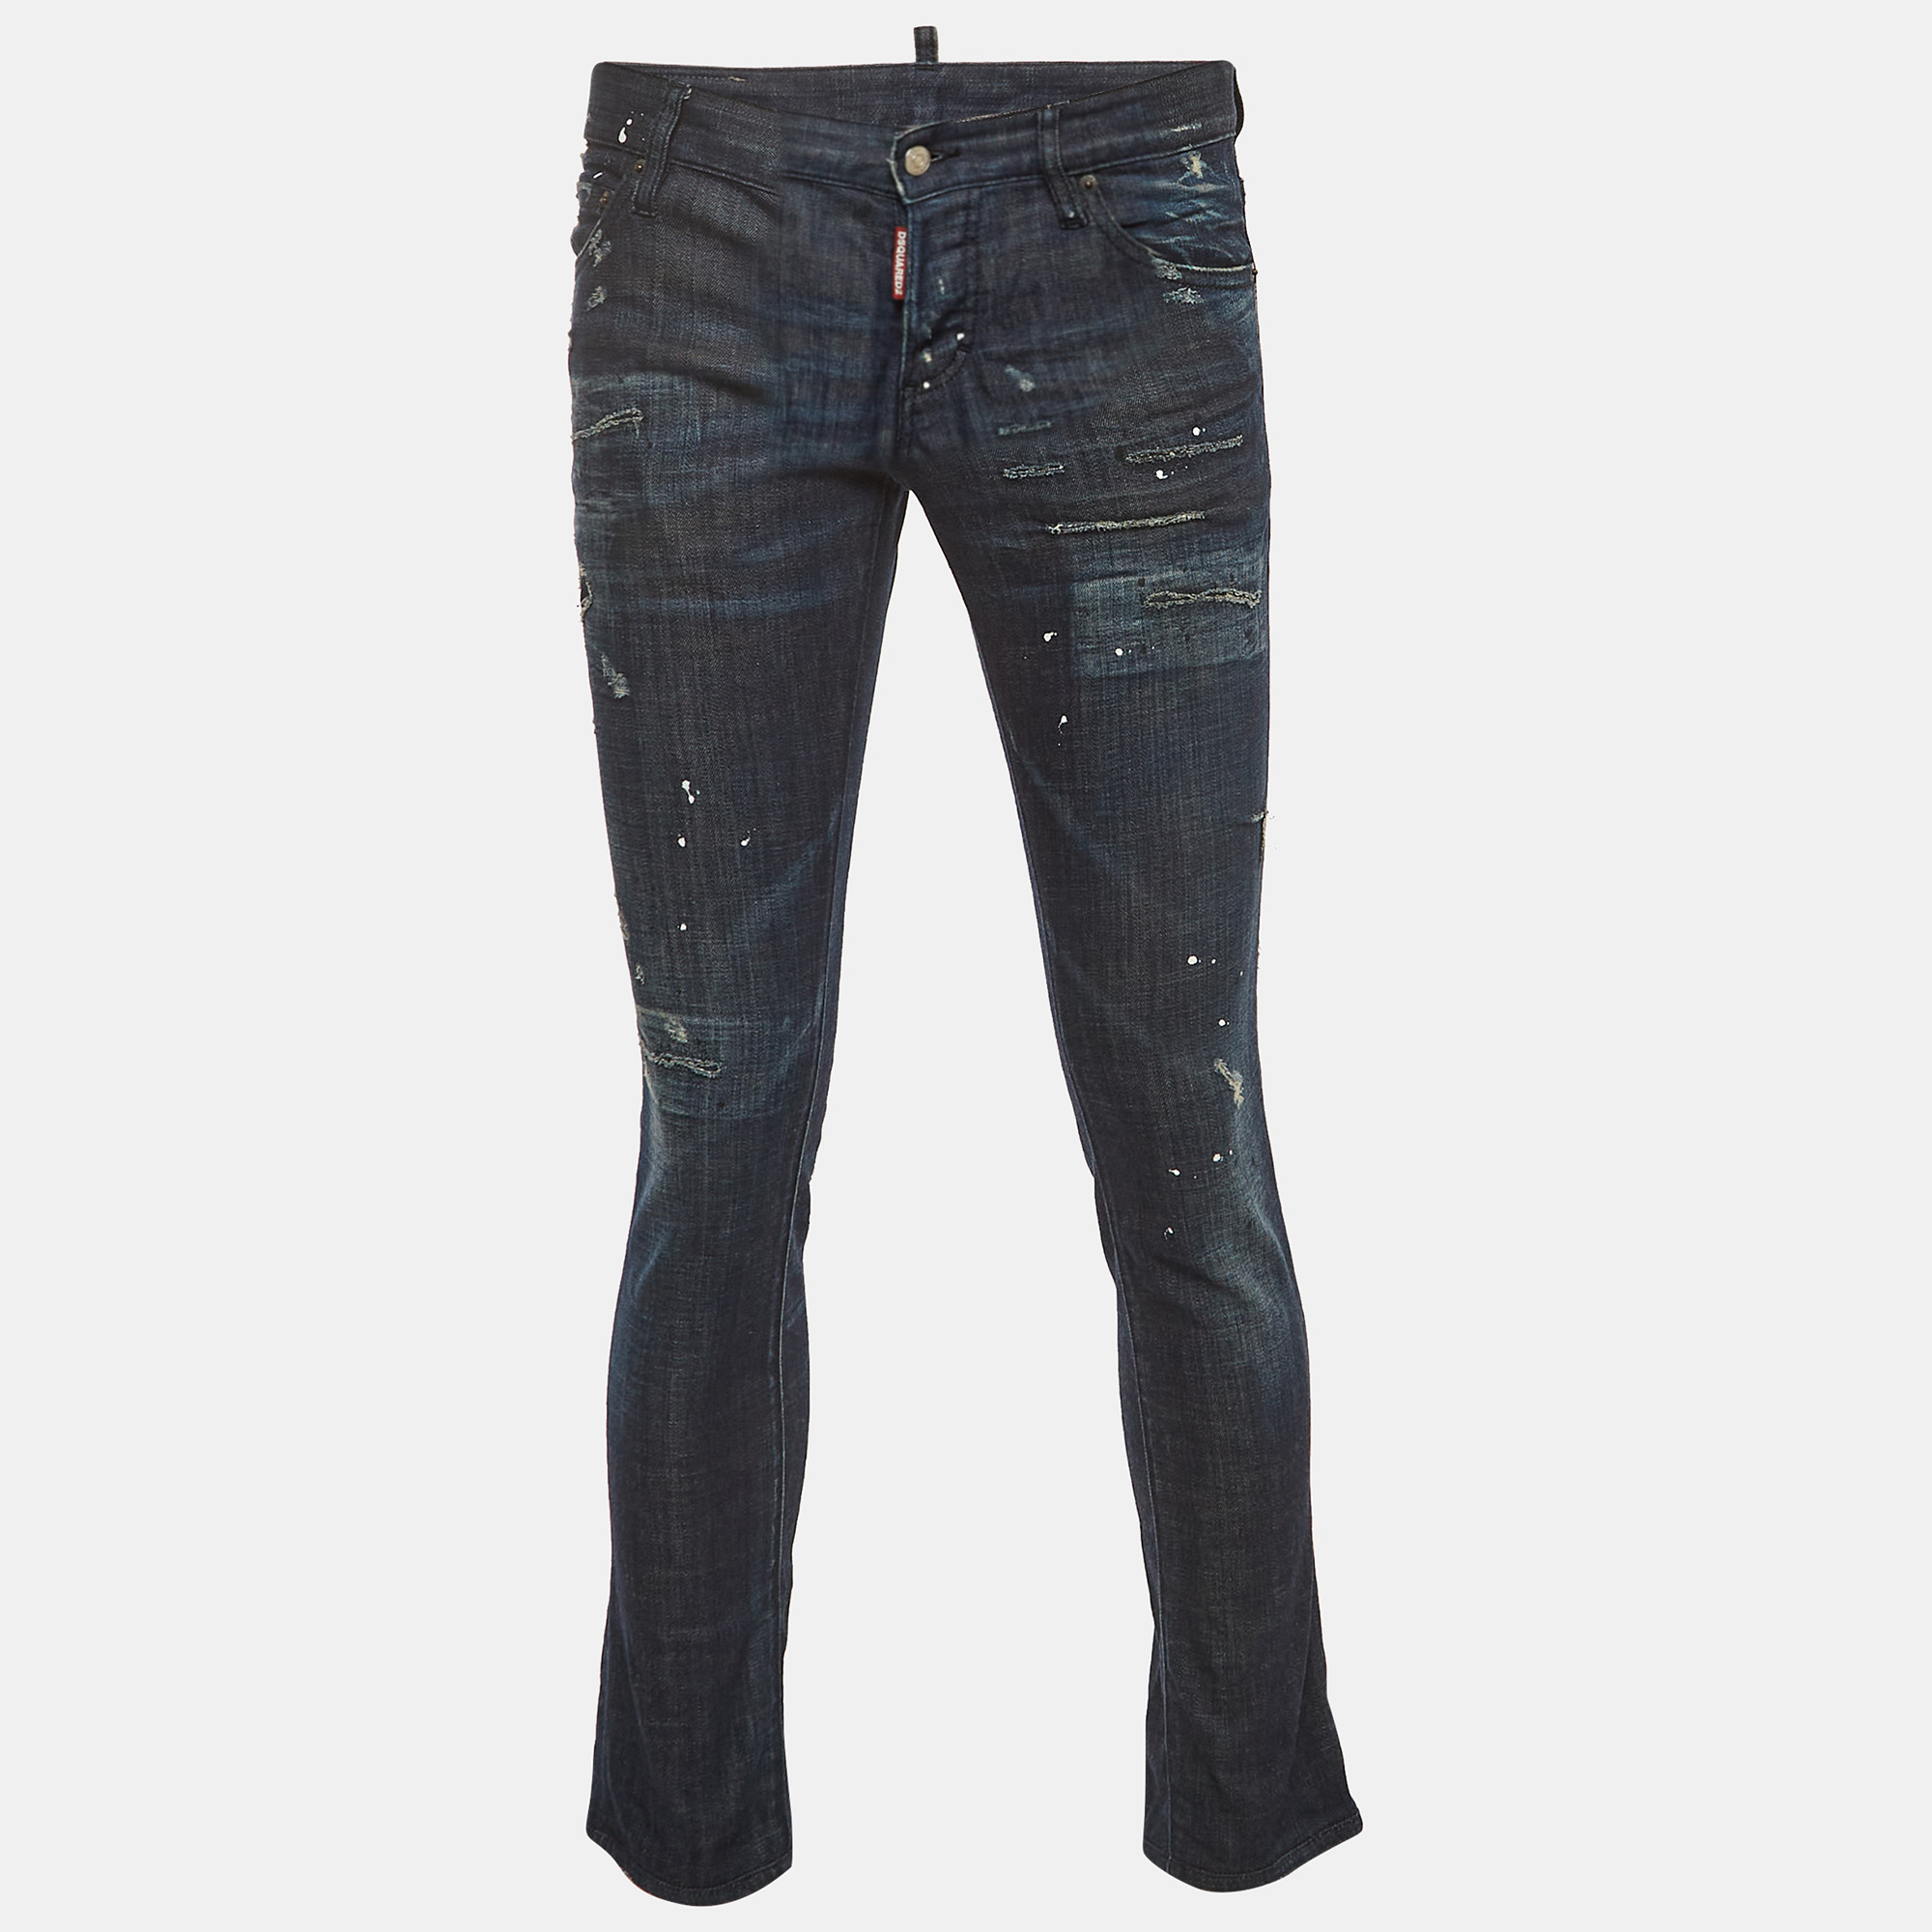 Dsquared2 Dark Blue Distressed Denim Jeans S Waist 32